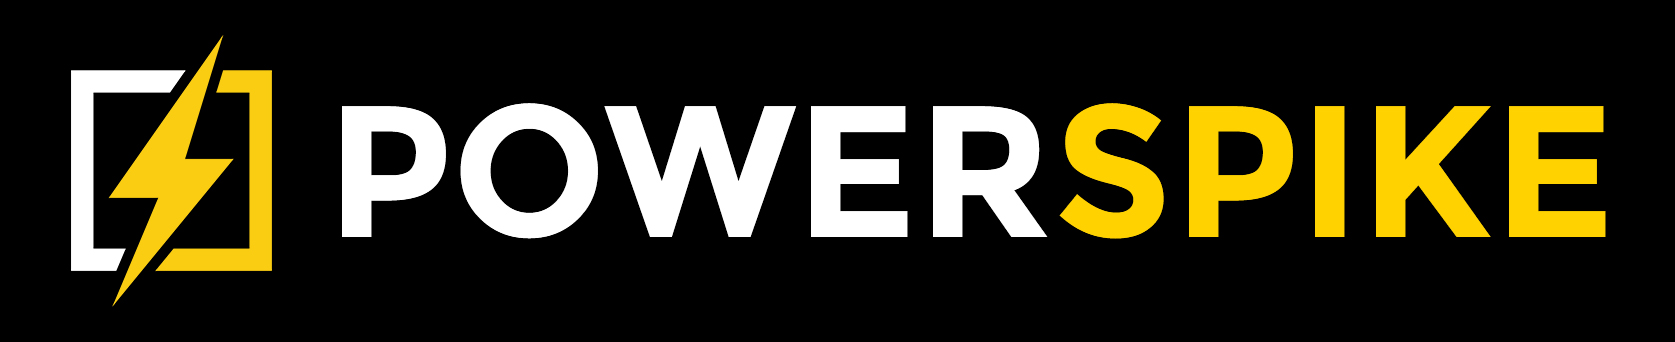 PowerSpike logo